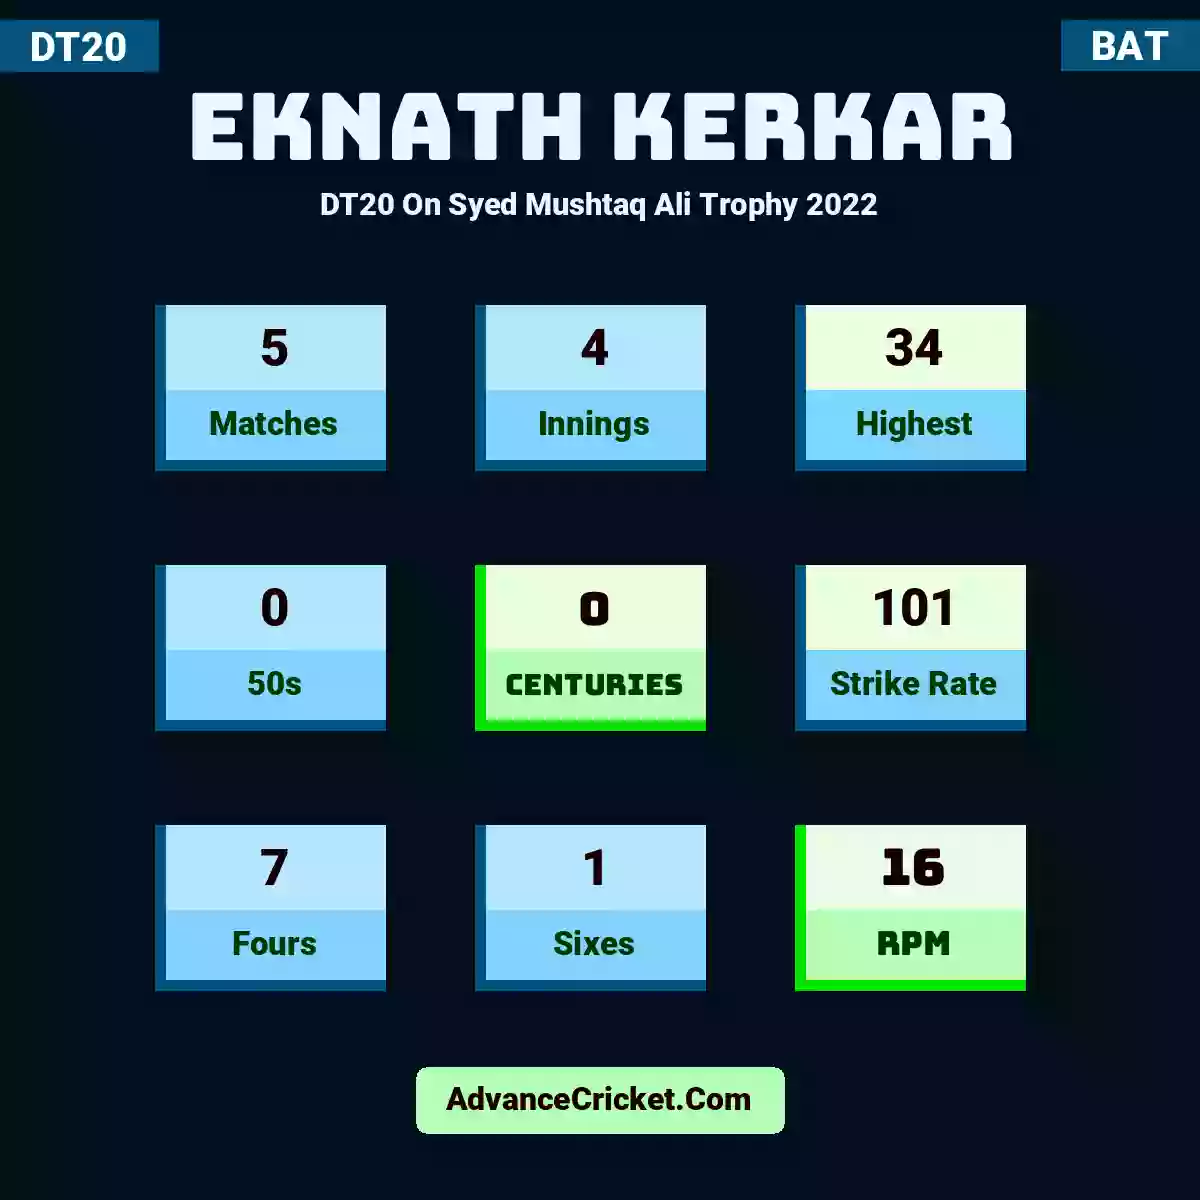 Eknath Kerkar DT20  On Syed Mushtaq Ali Trophy 2022, Eknath Kerkar played 5 matches, scored 34 runs as highest, 0 half-centuries, and 0 centuries, with a strike rate of 101. E.Kerkar hit 7 fours and 1 sixes, with an RPM of 16.